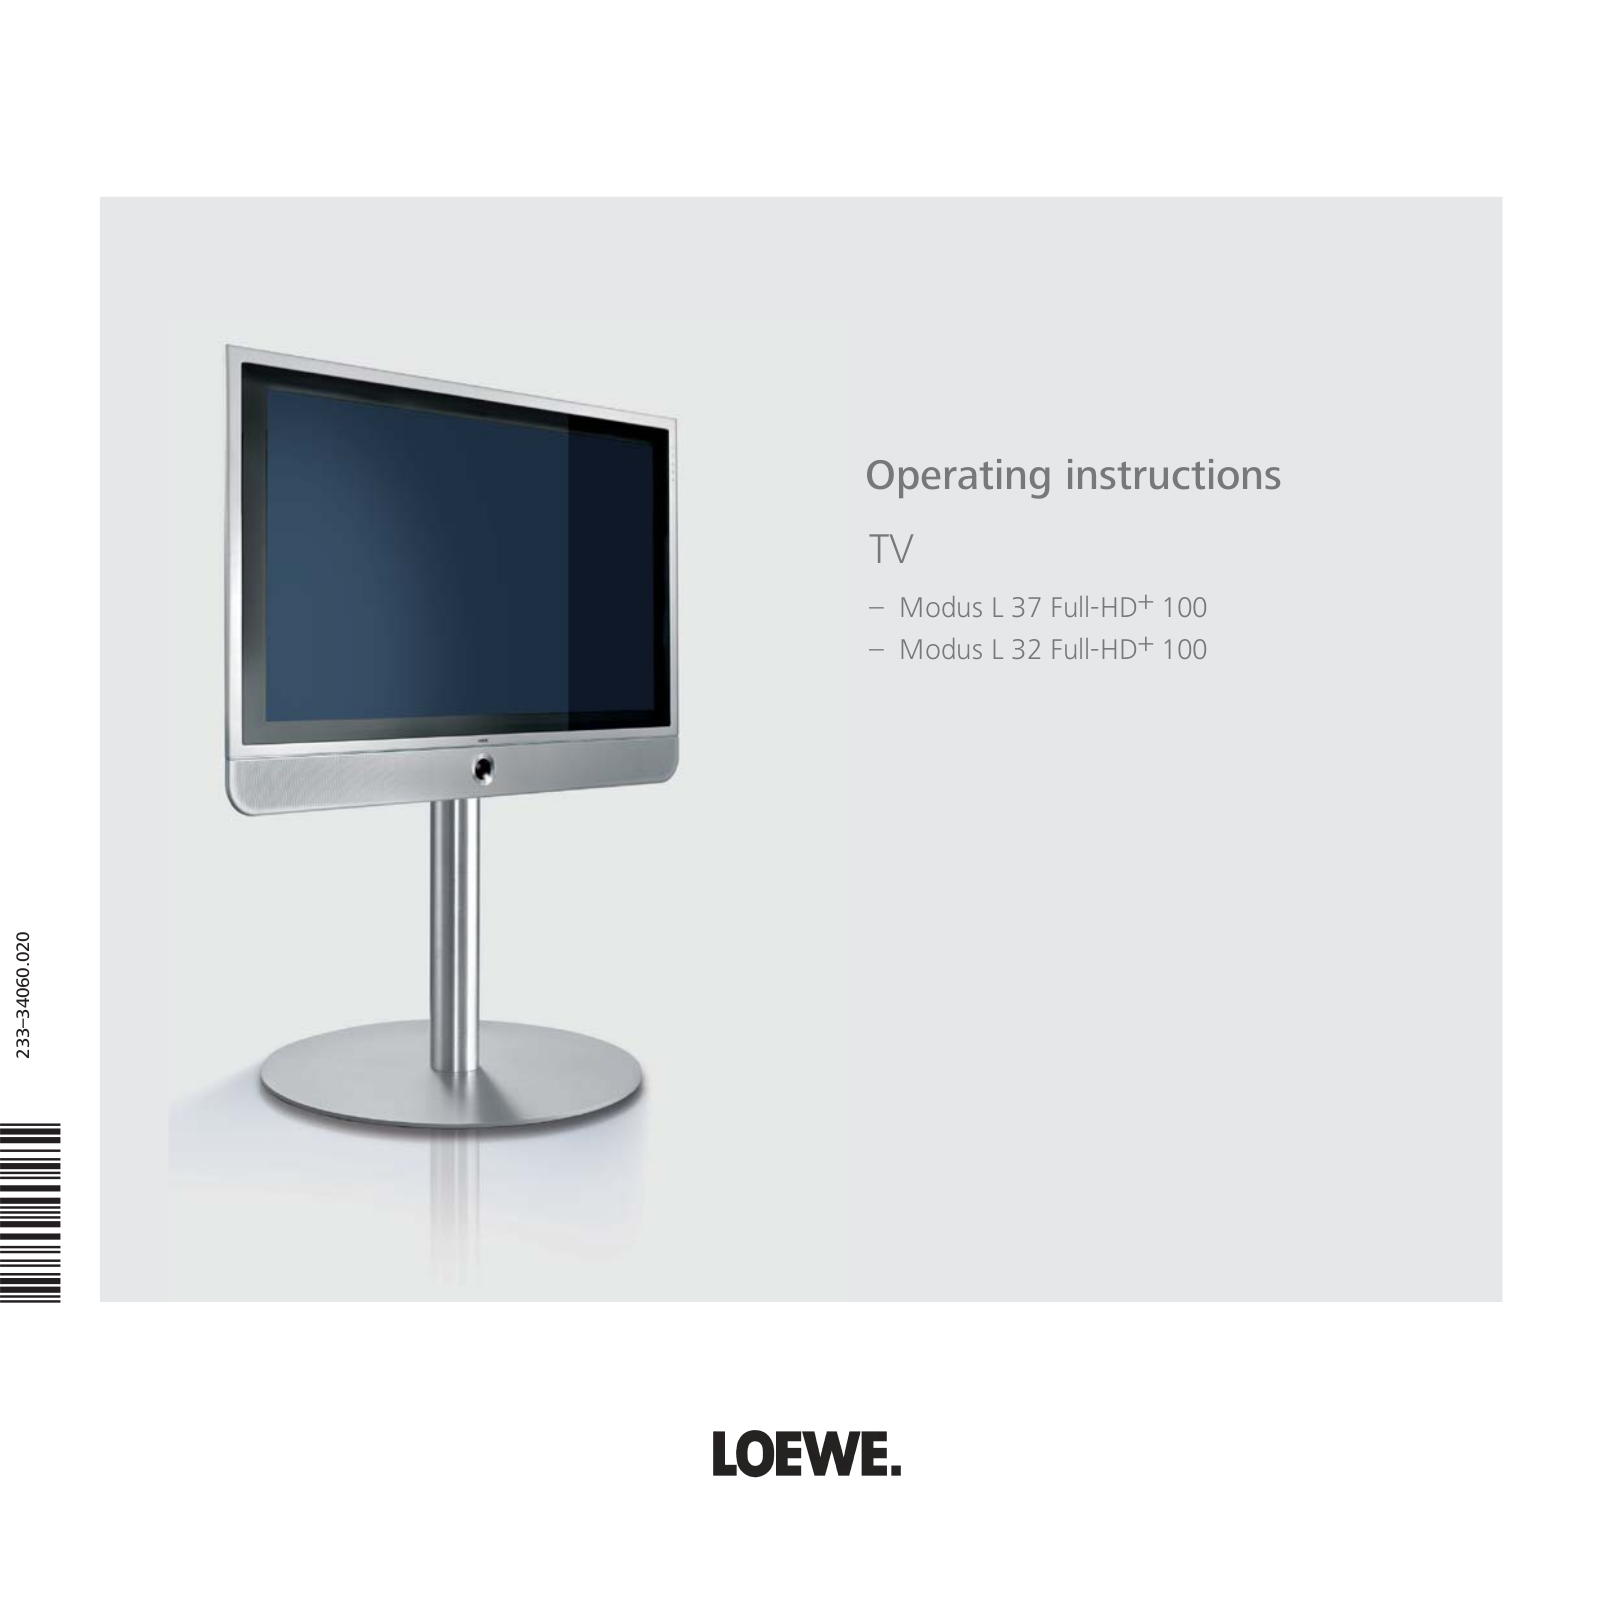 Loewe Modus L 37 FHD+100 User Manual